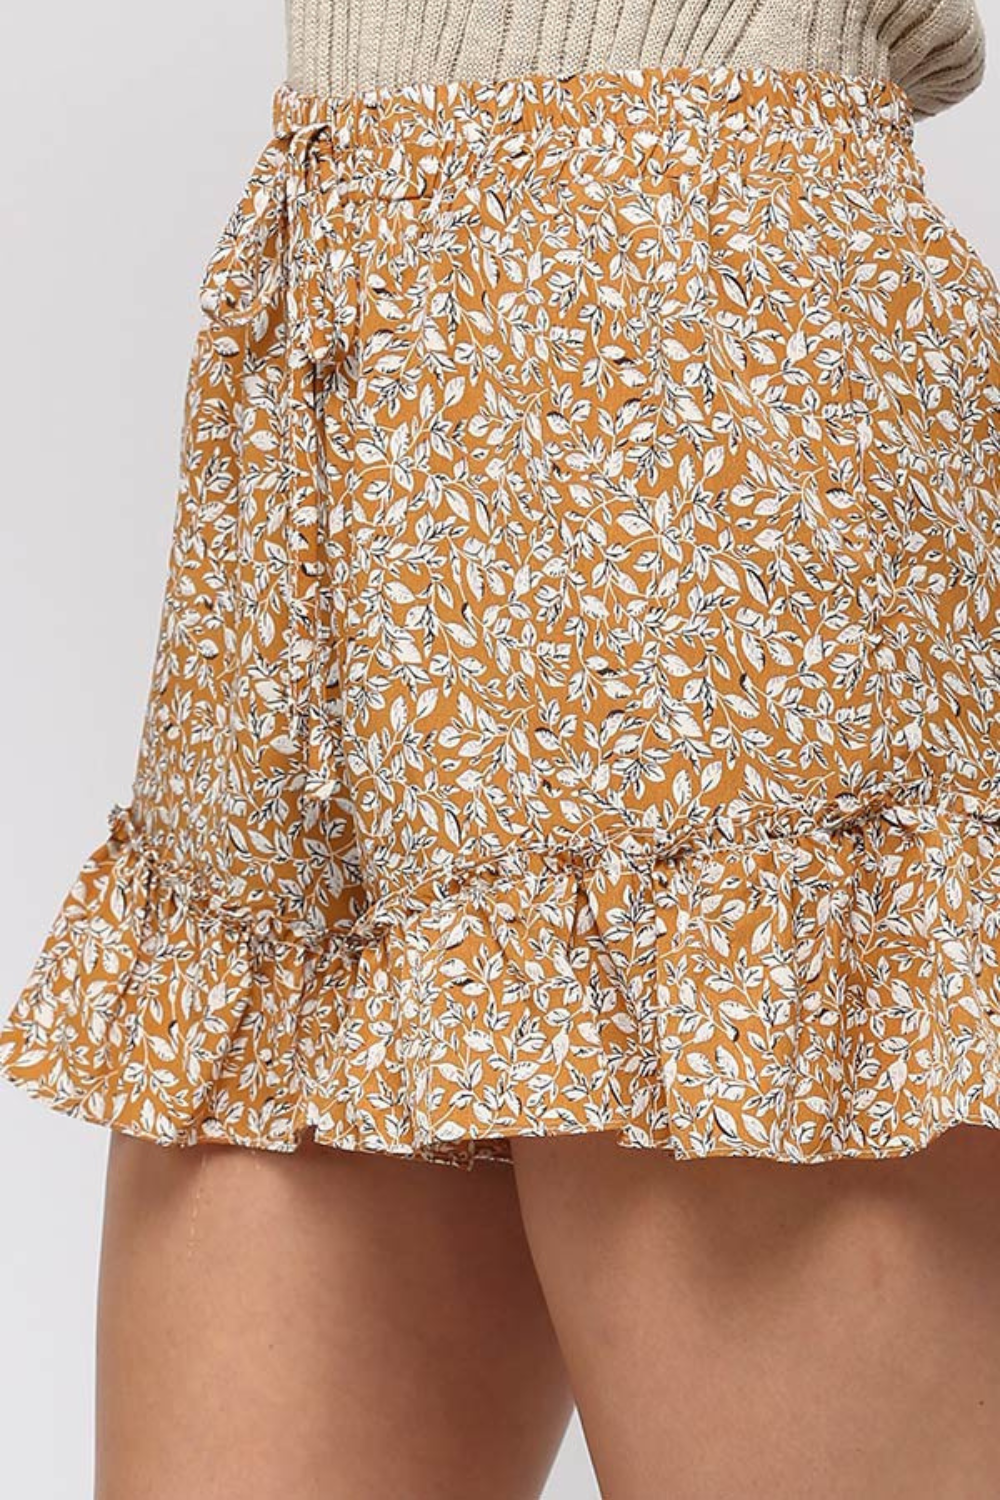 Leaf Print Ruffle Shorts